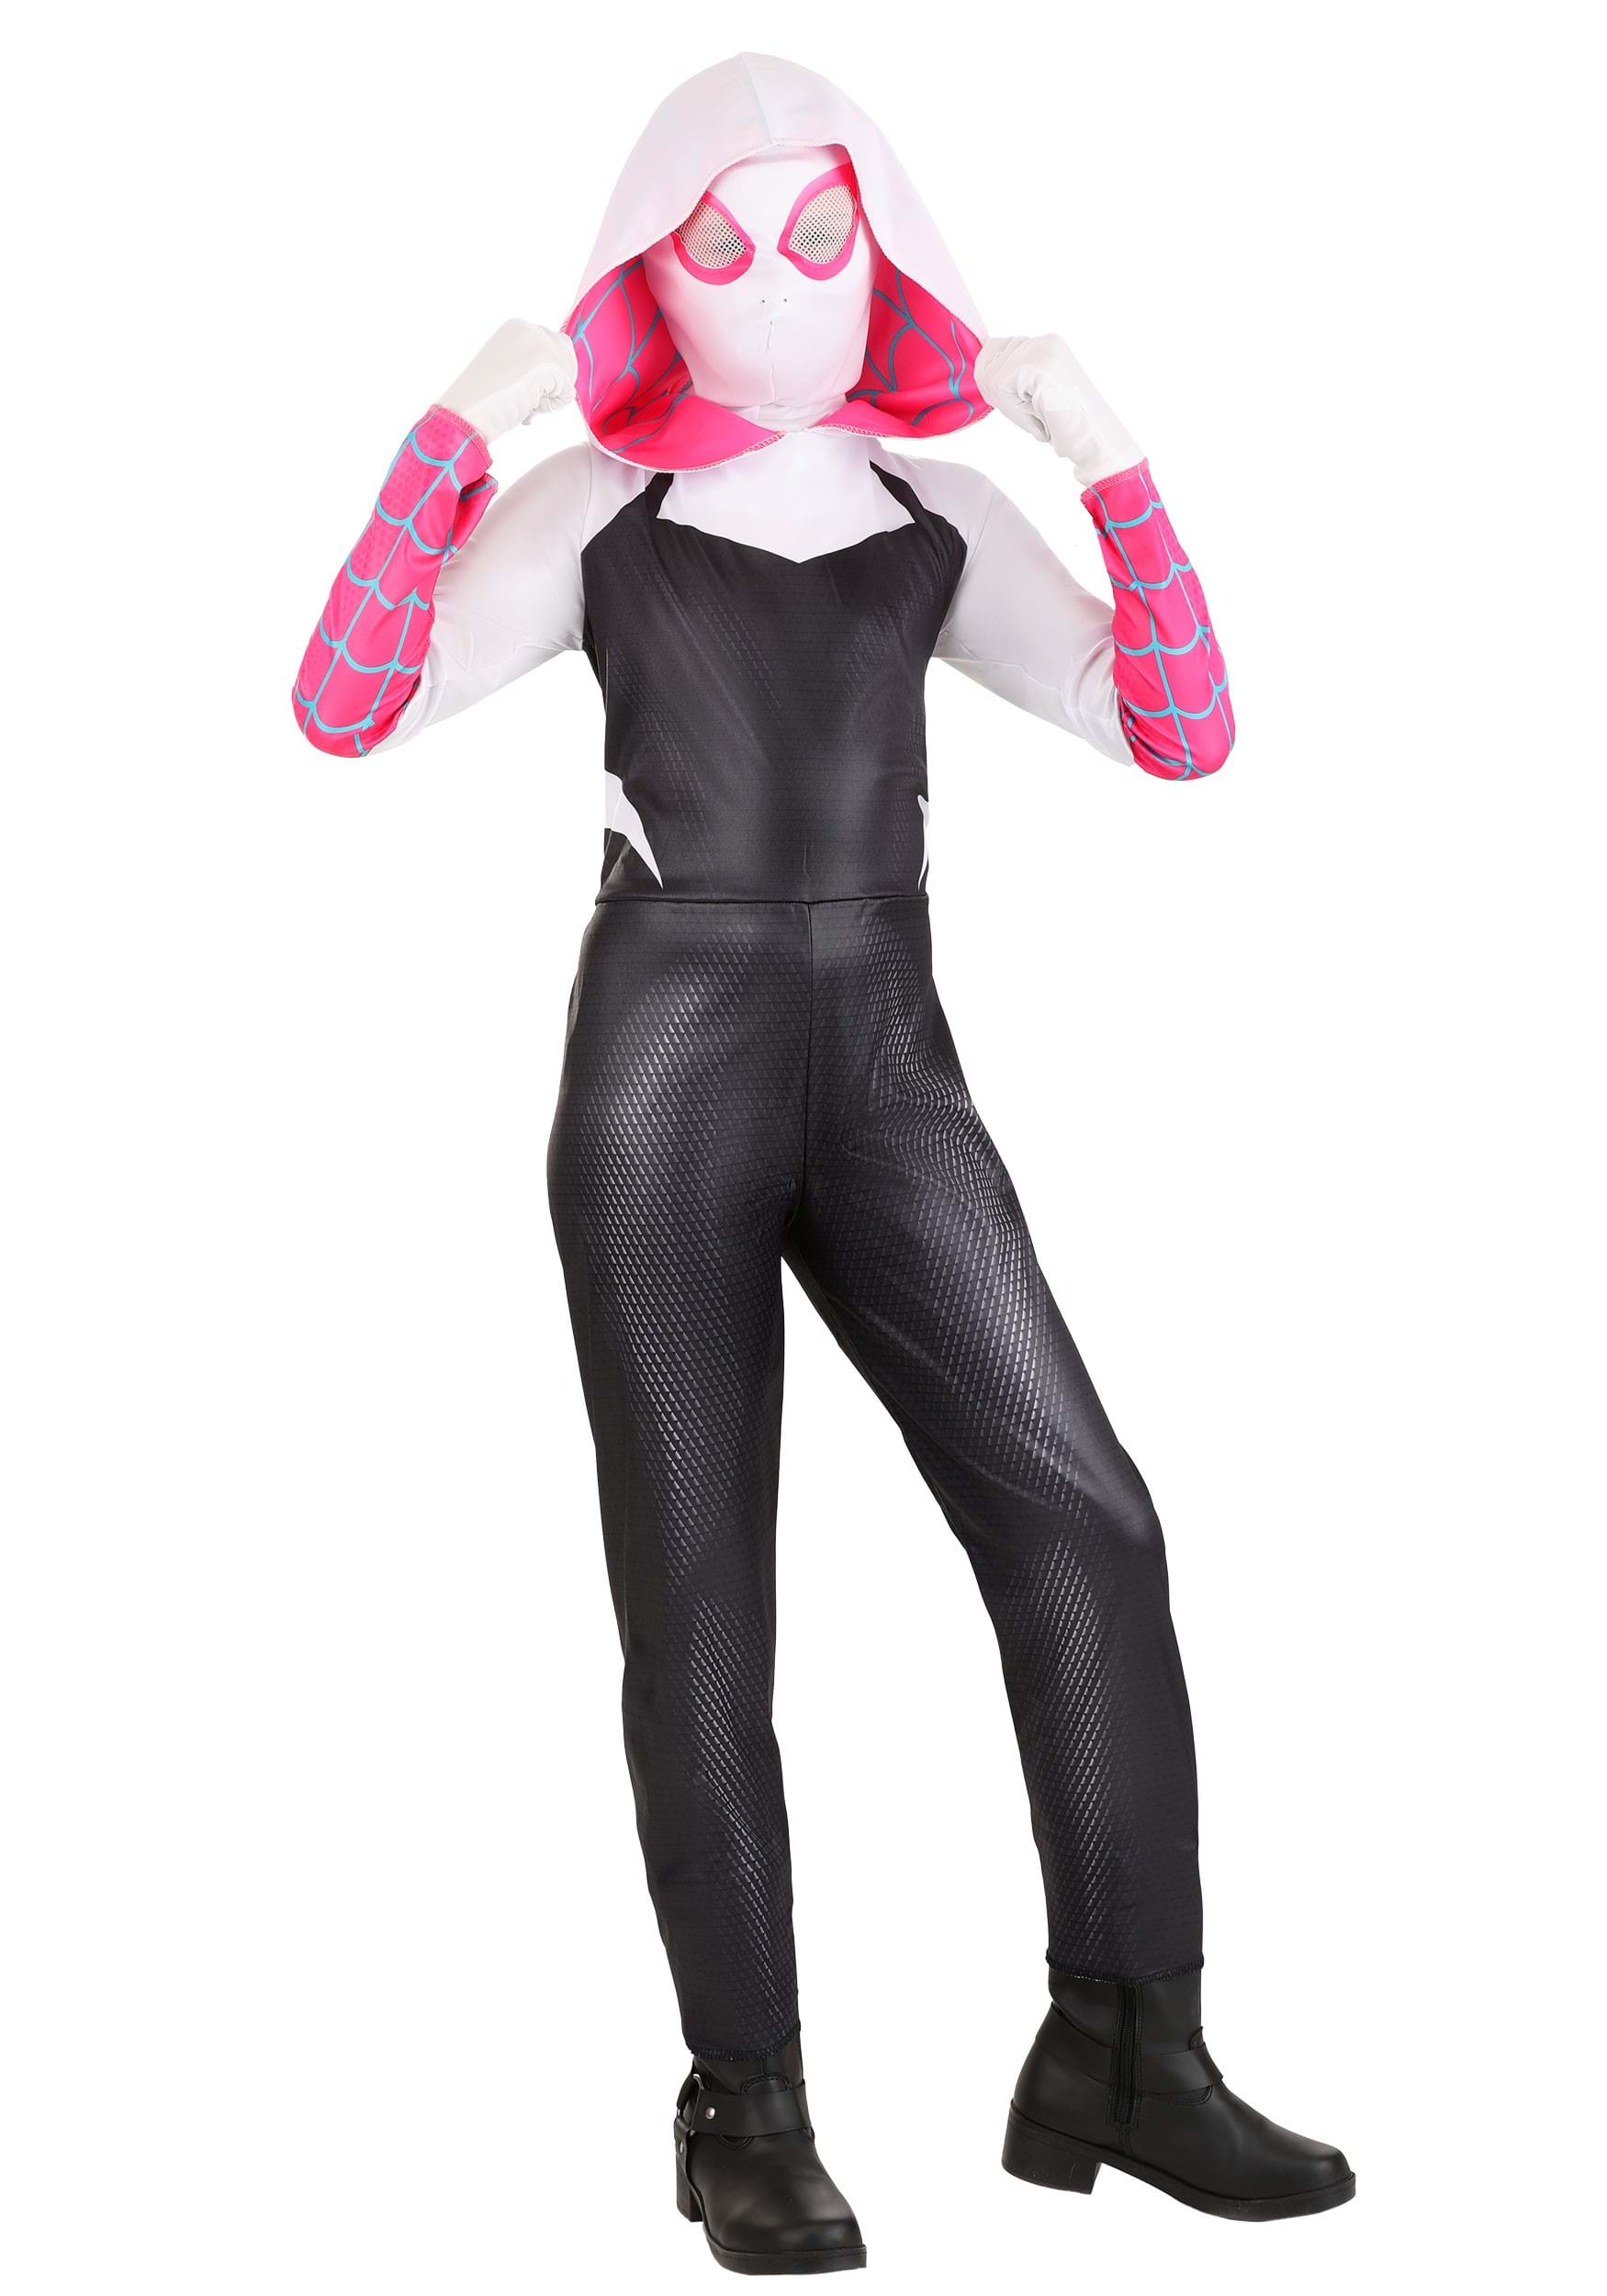 Spider girl🕷  Spider woman costumes, Halloween outfits, Halloween costume  outfits